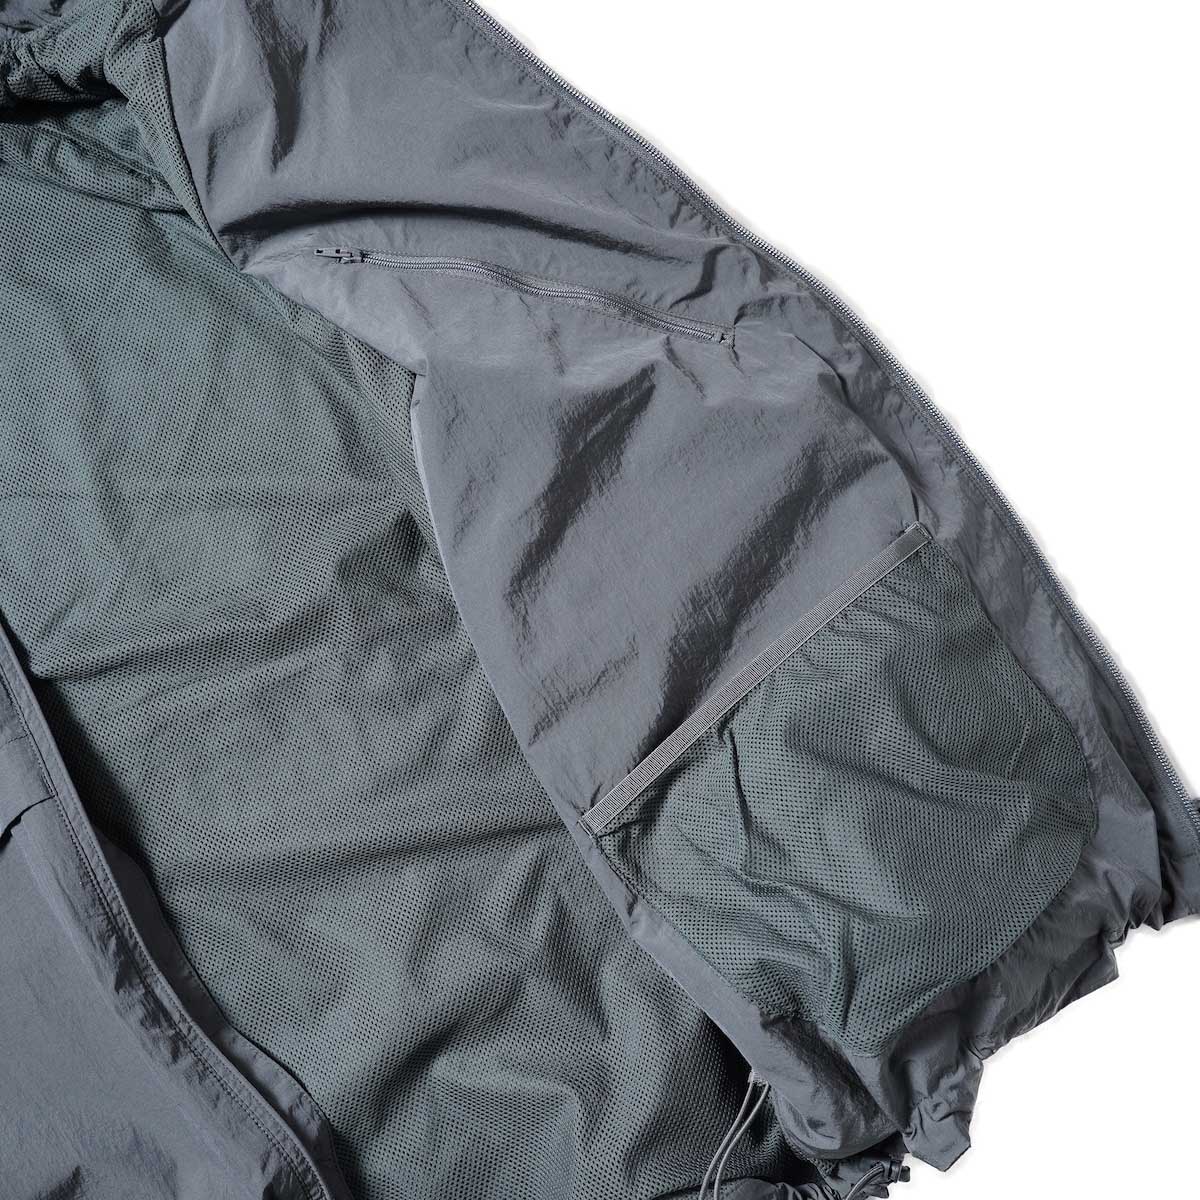 DAIWA PIER39 / Tech Windbreaker Jacket (Charcoal)内ポケット